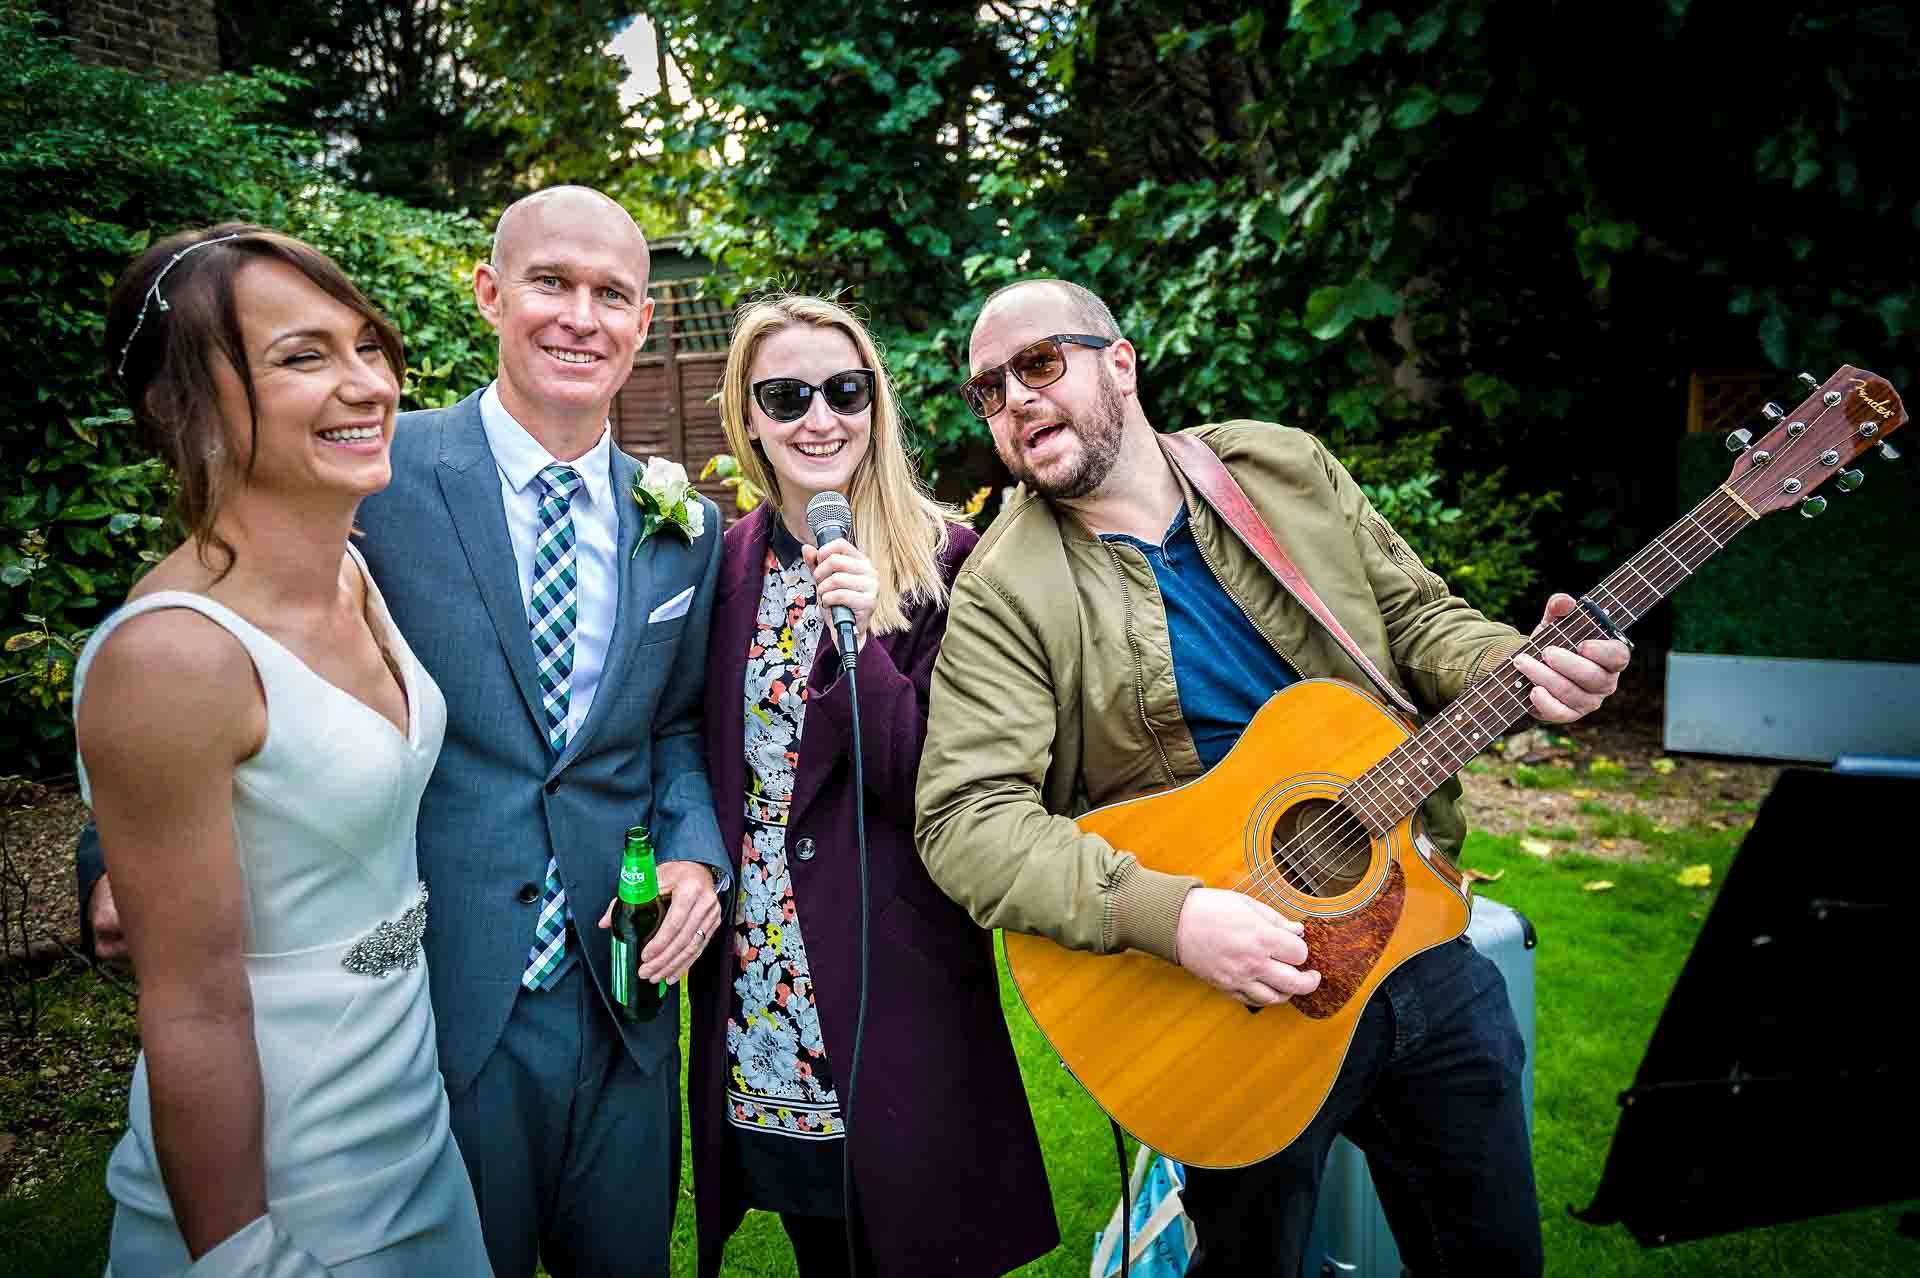 Wedding guitar dup serenading happy couple in garden